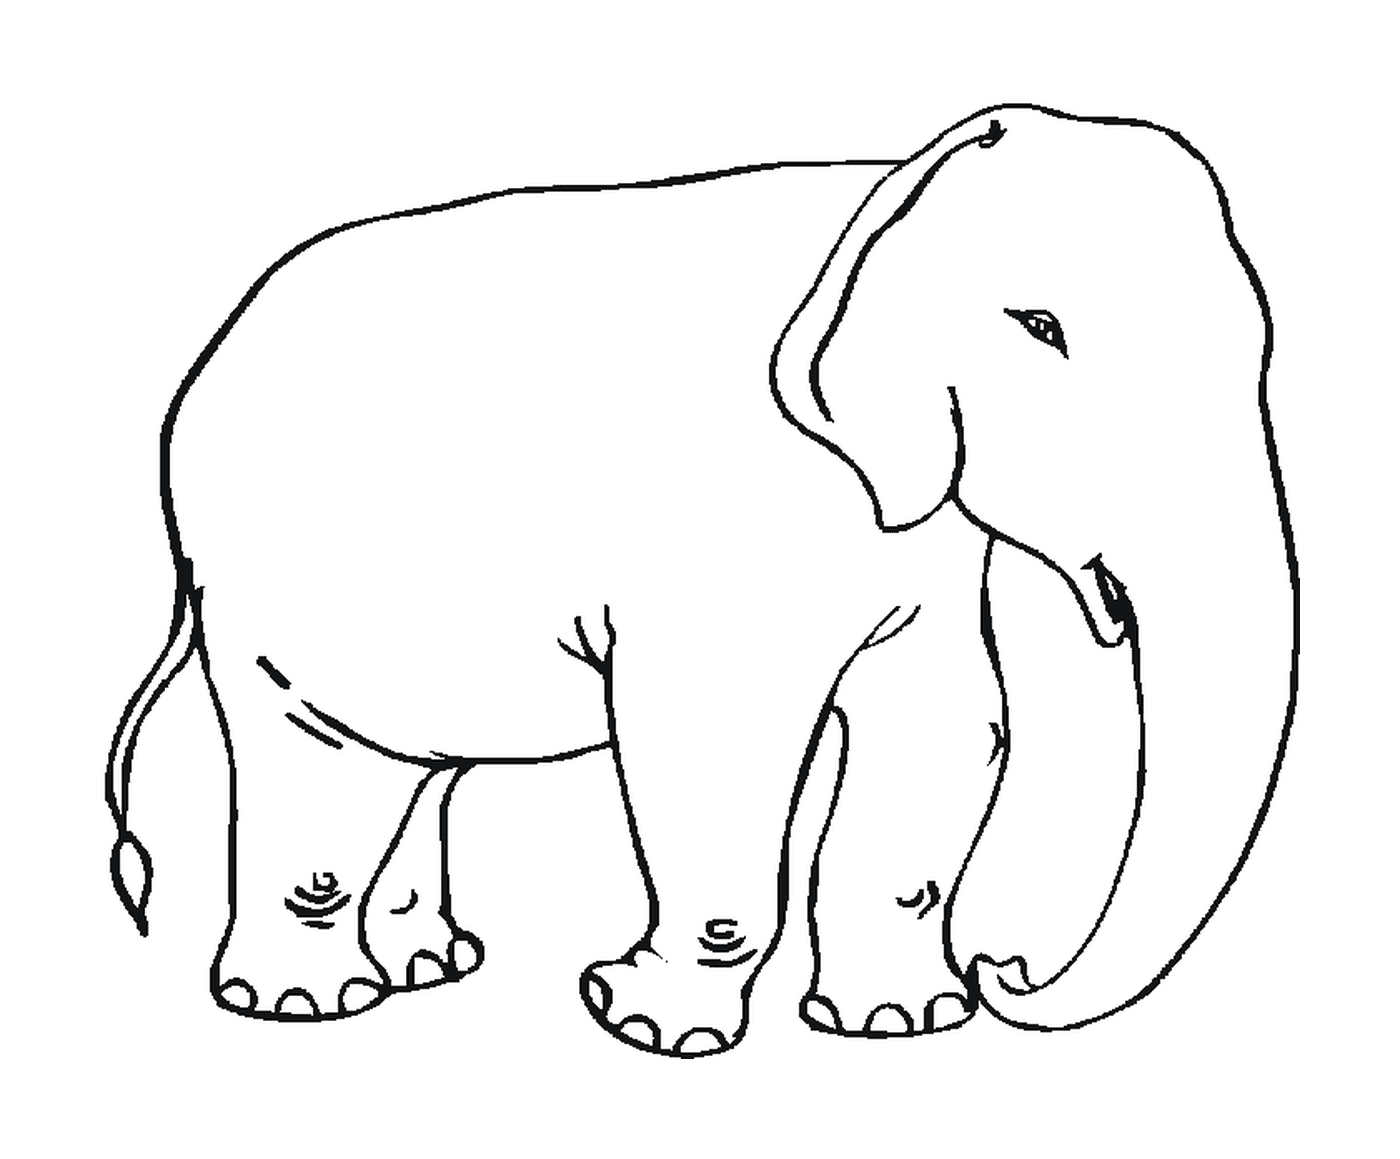  Colouring Elephant 